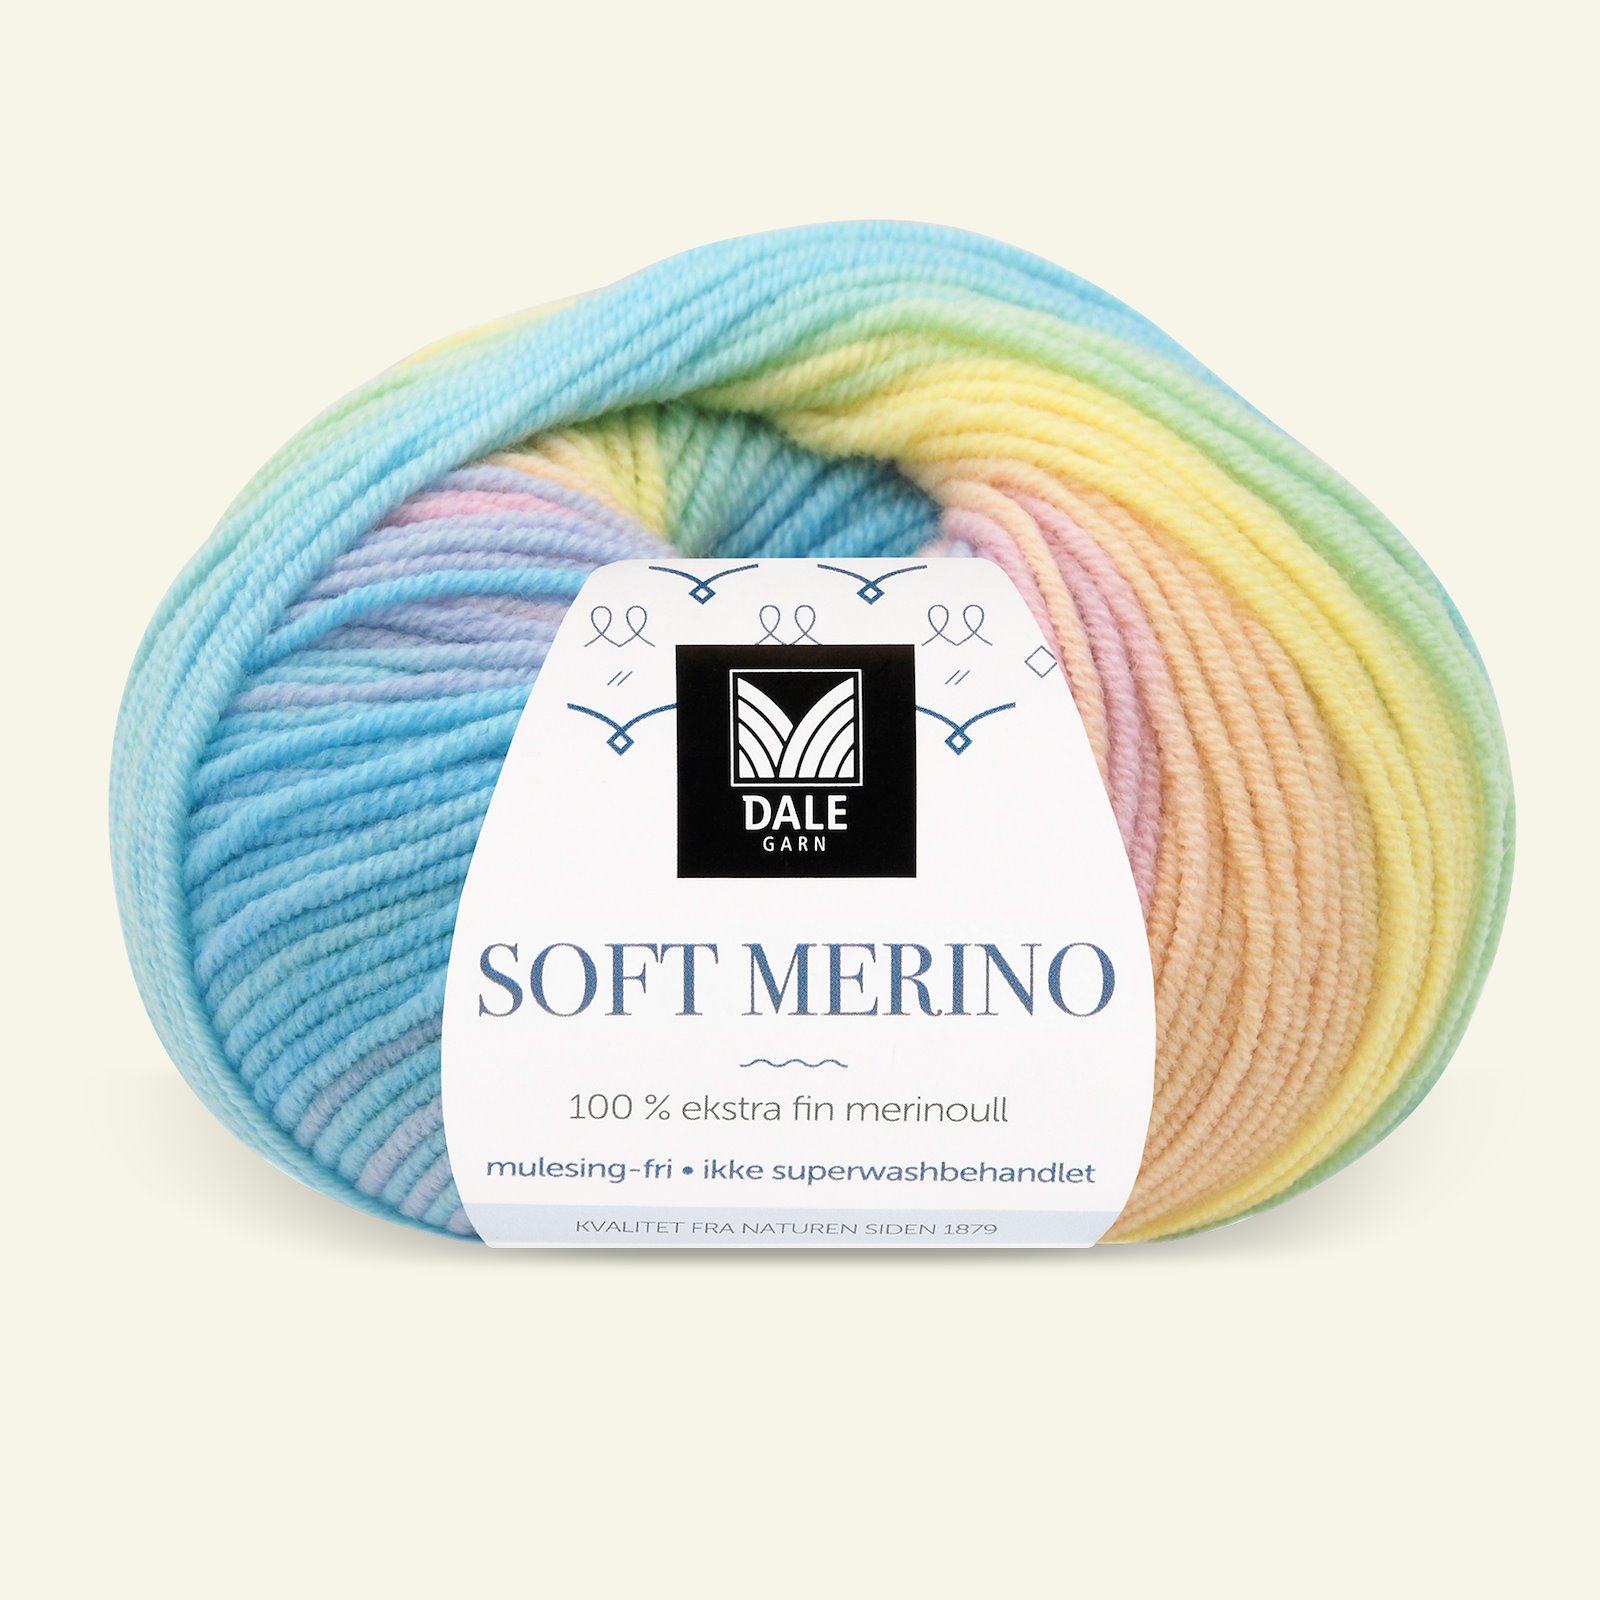 Dale Garn, 100% ekstra fint merinogarn "Soft Merino", Pastell print 90001221_pack